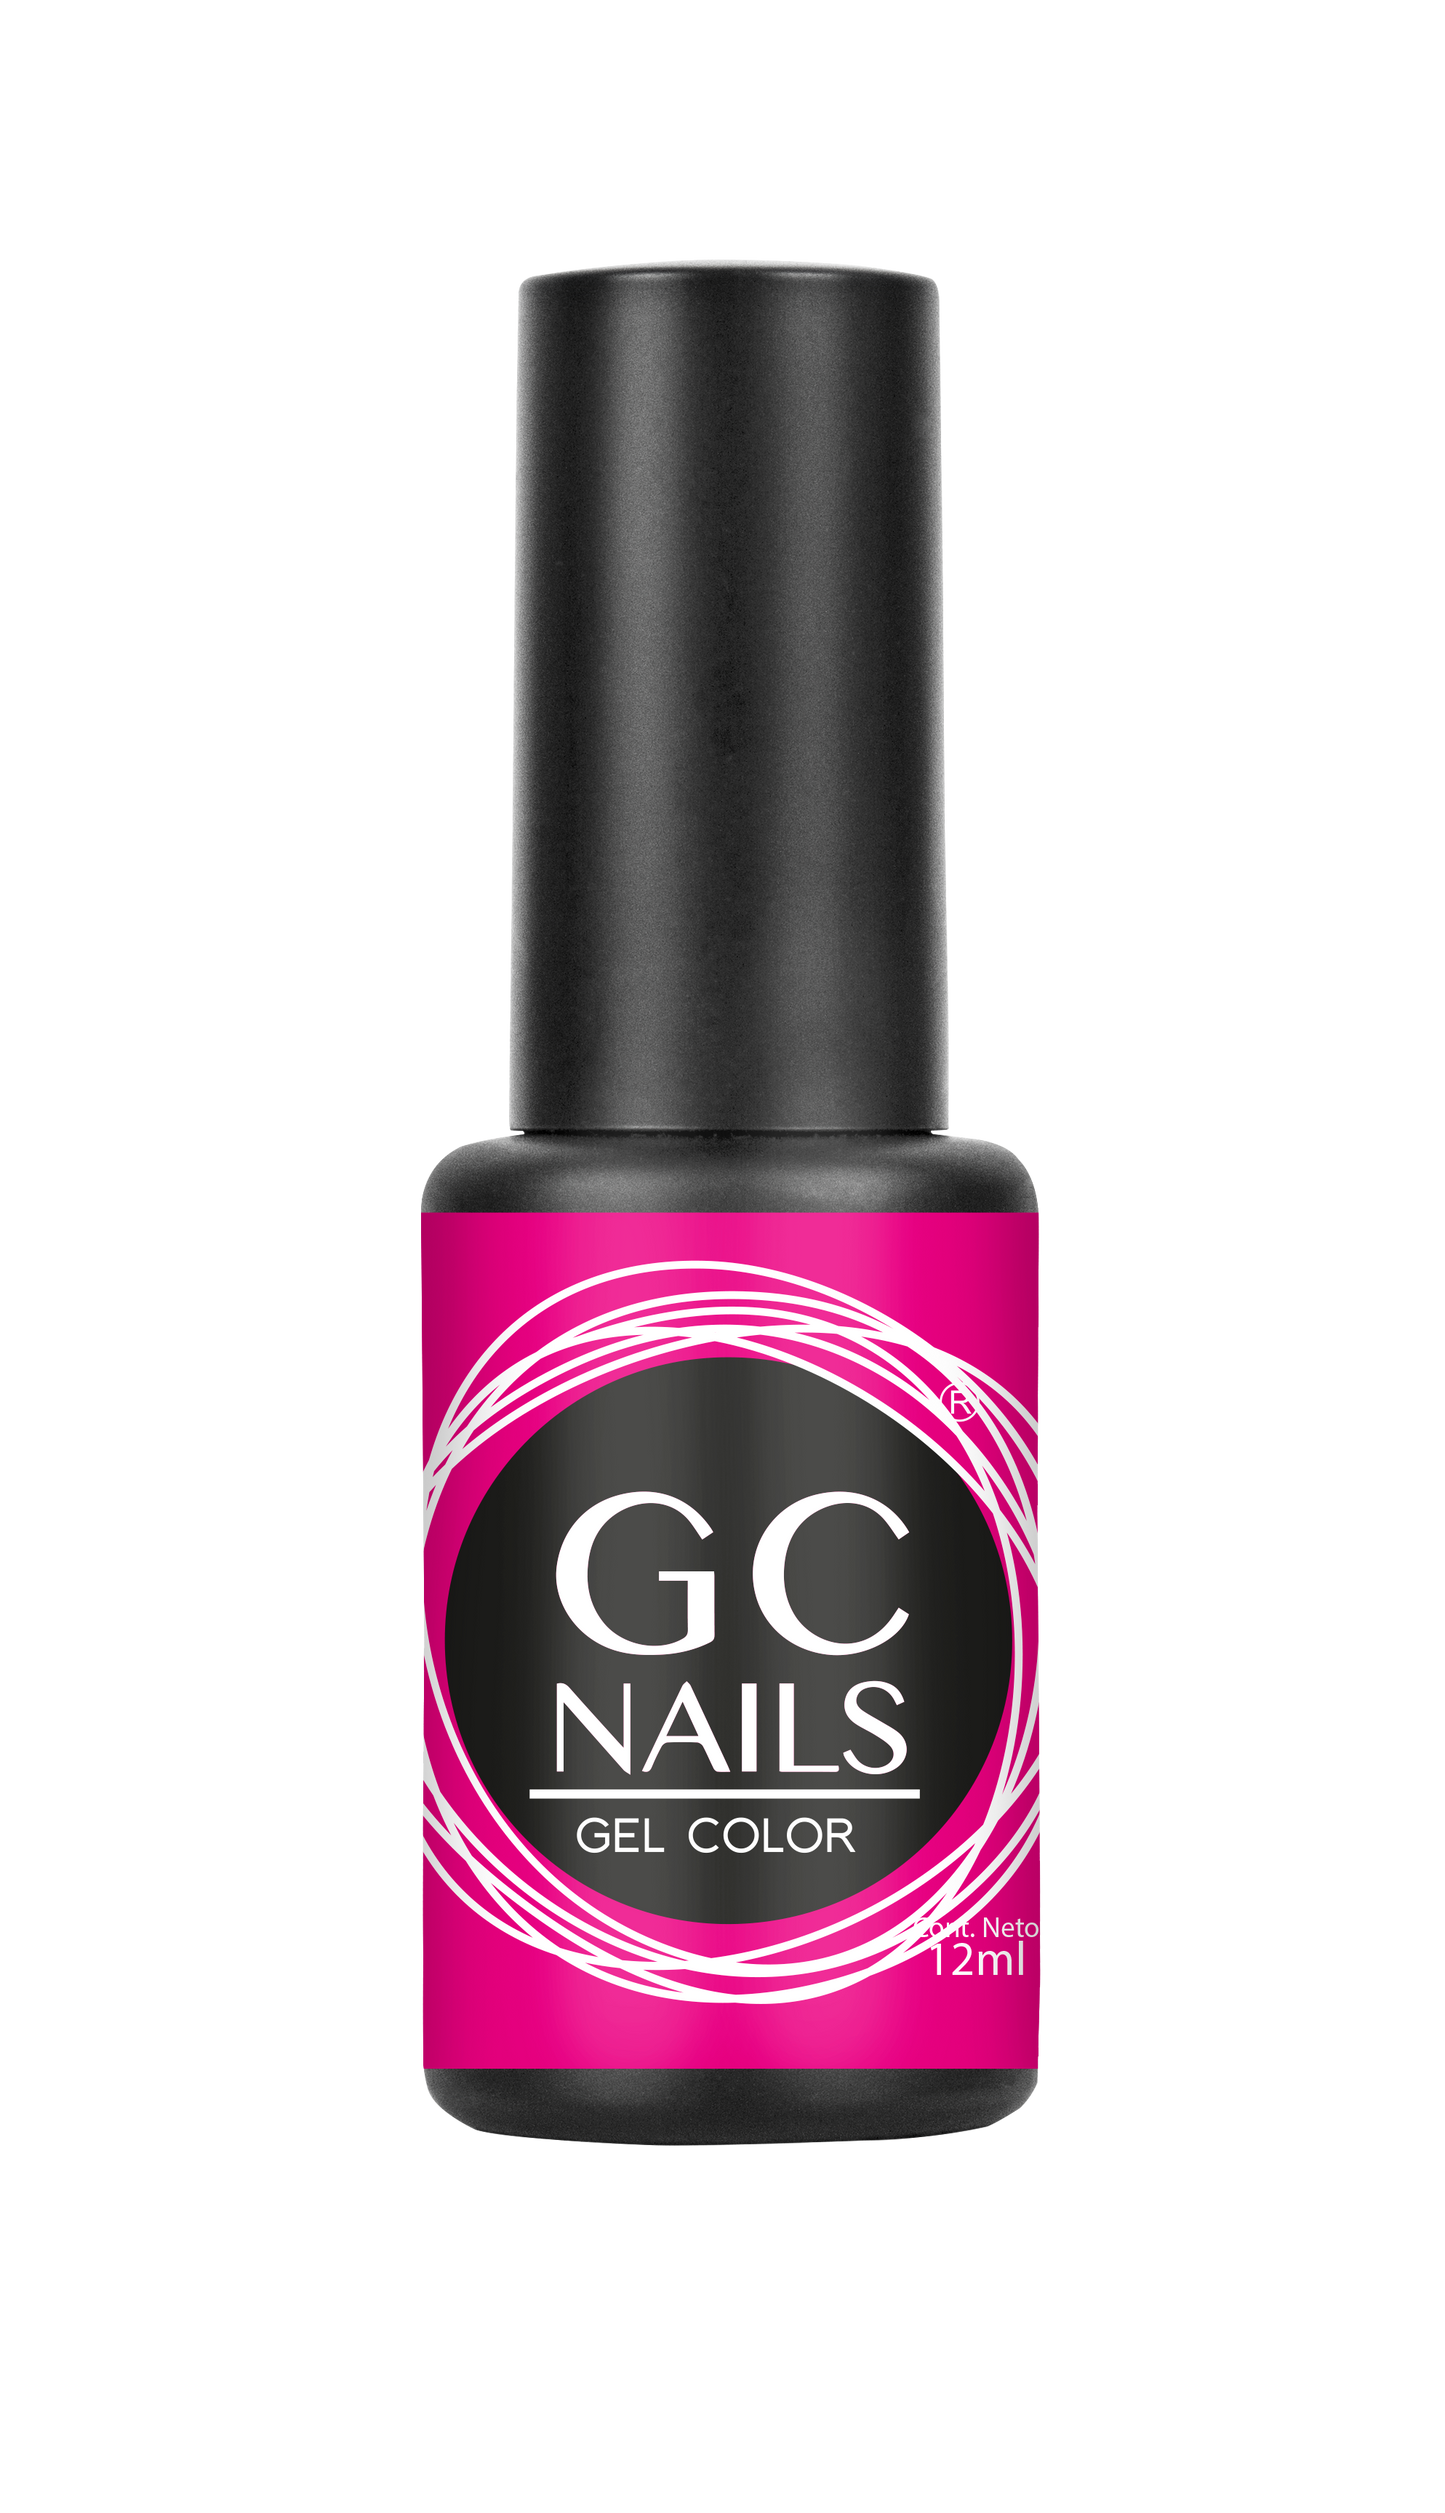 GC nails bel-color 12ml TORONJA GLOW 38